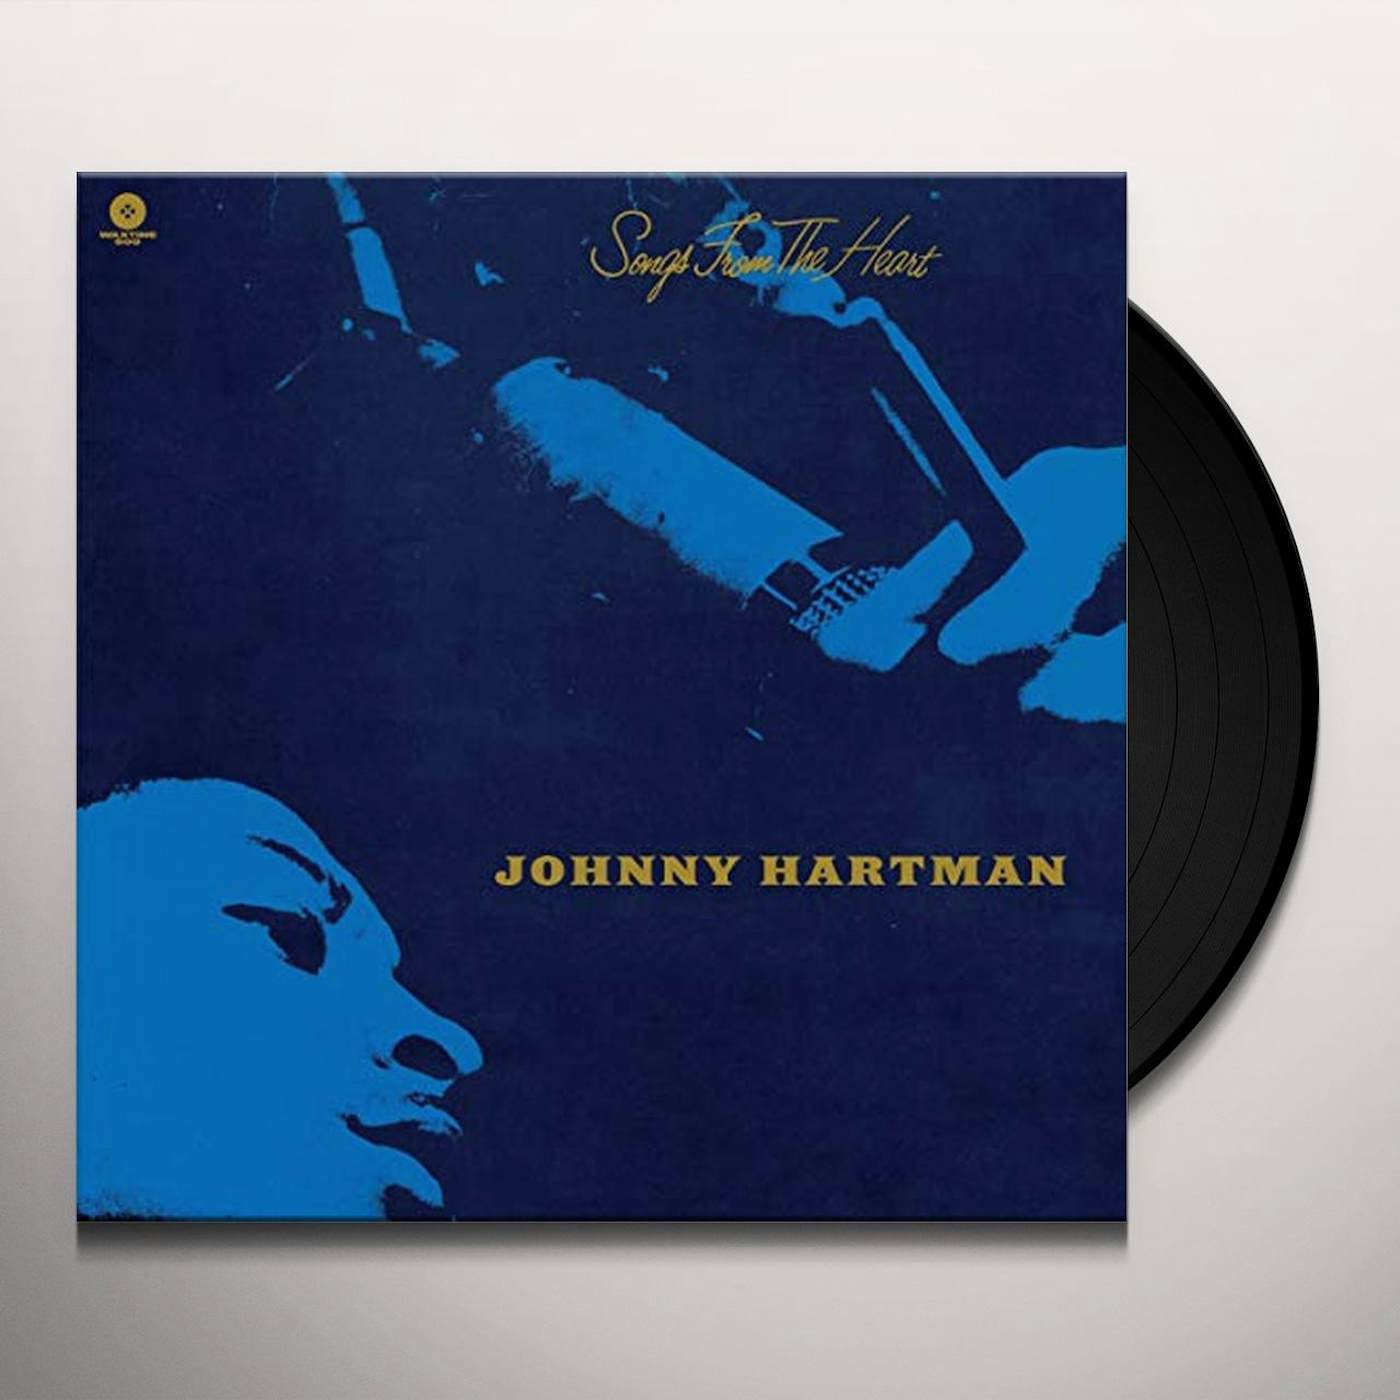 Johnny Hartman SONGS FROM THE HEART (AUDP) (BONUS TRACKS) Vinyl Record - Limited Edition